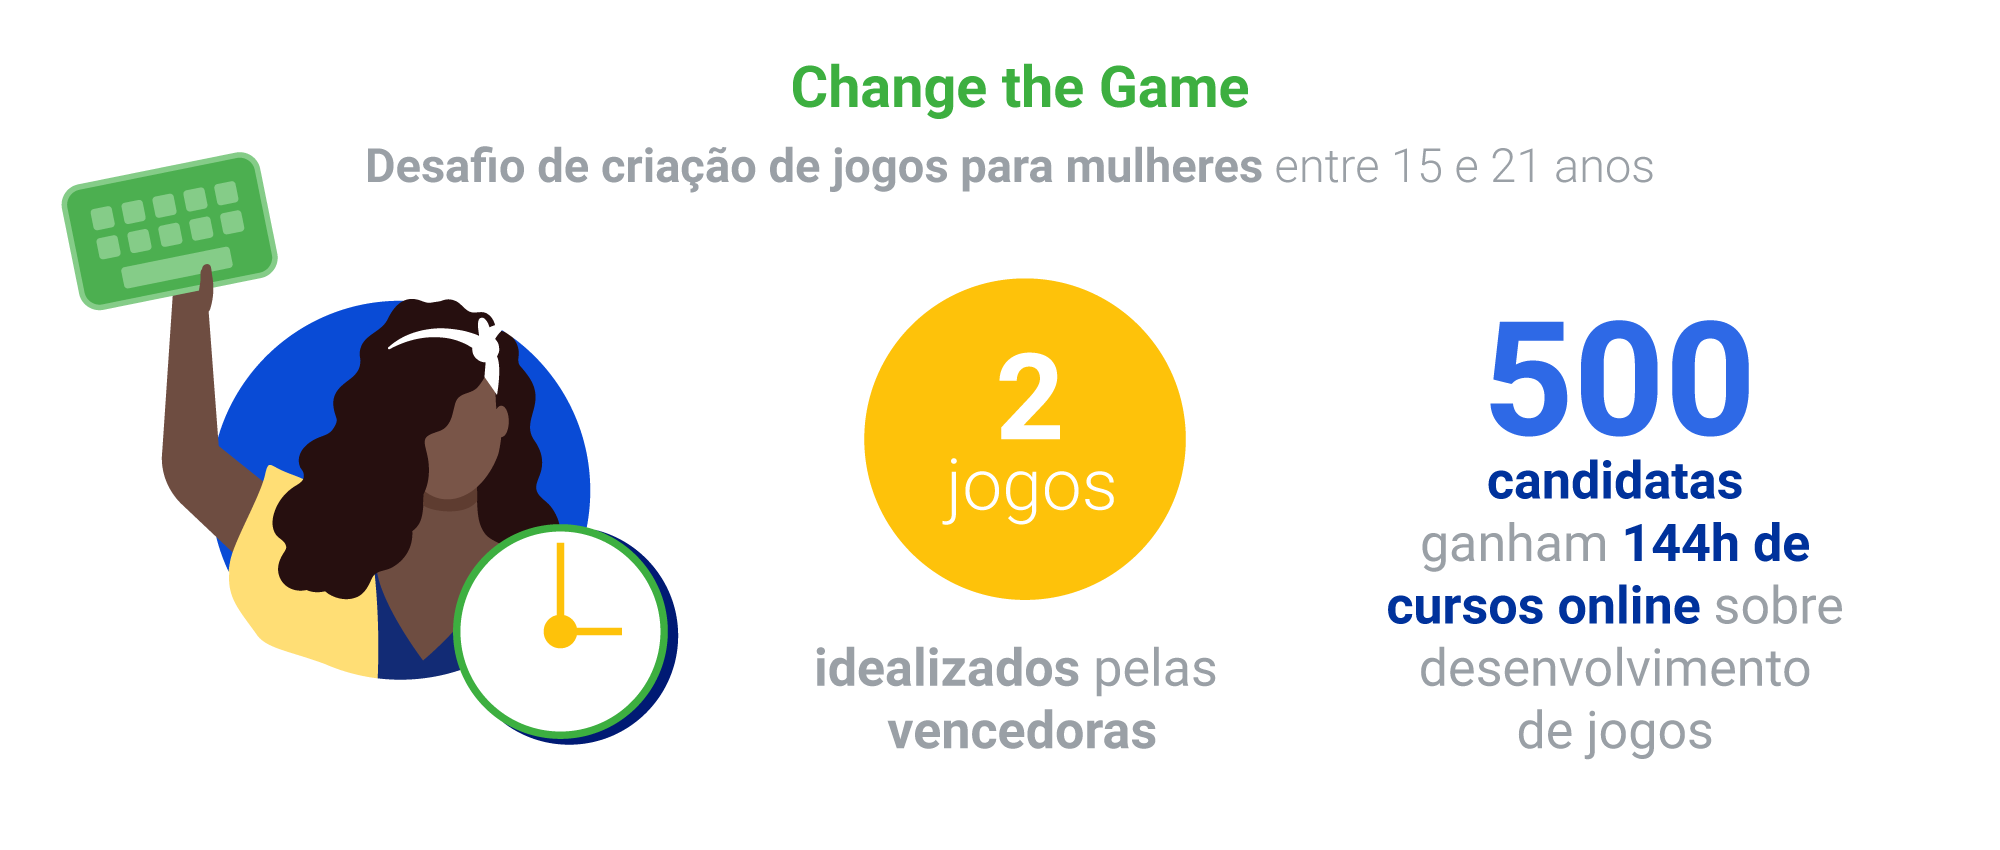 Desafio Change the Game usa tecnologia para empoderar jovens